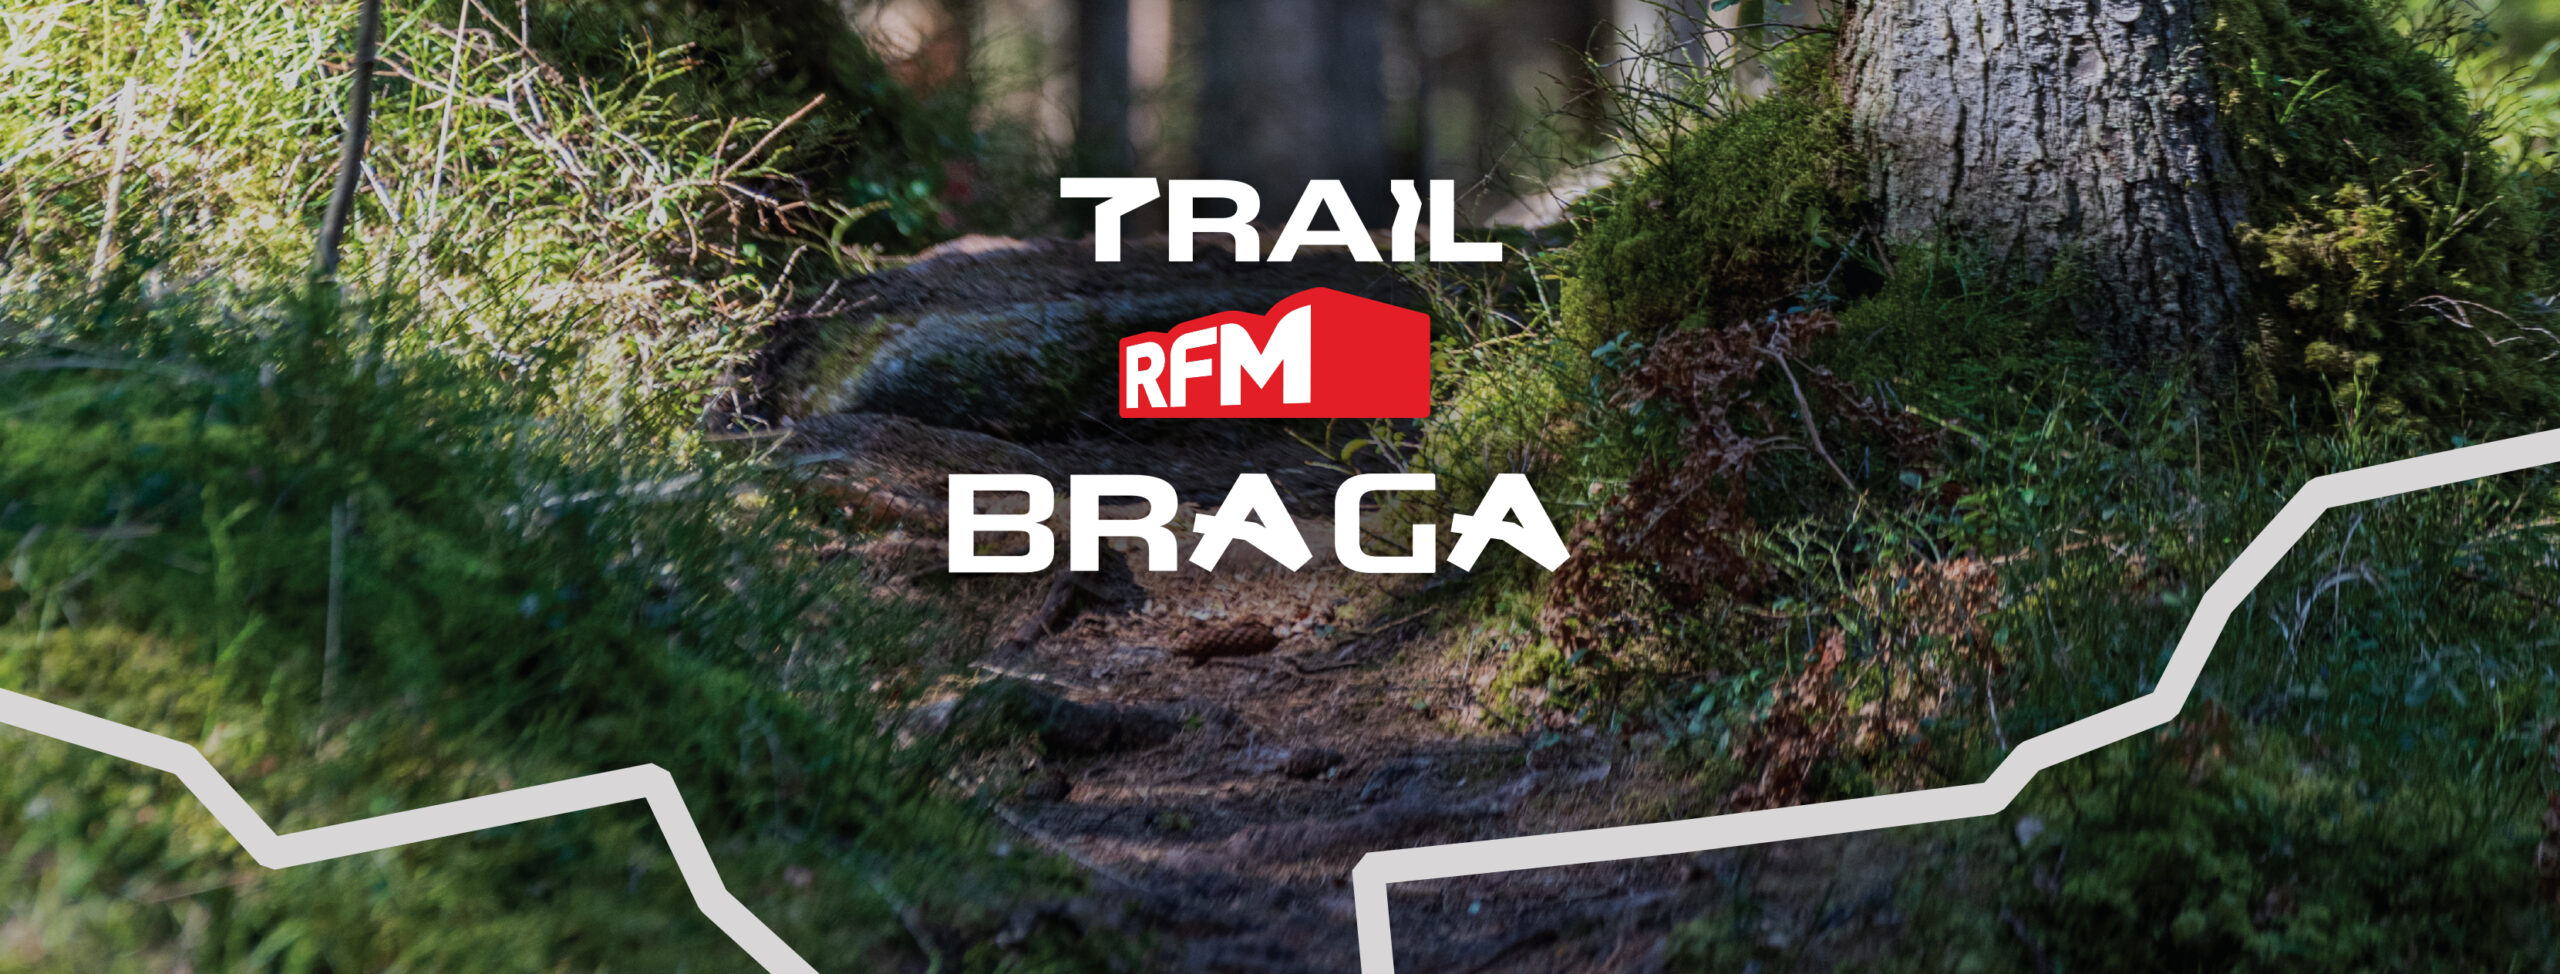 3320x1263-trail-braga